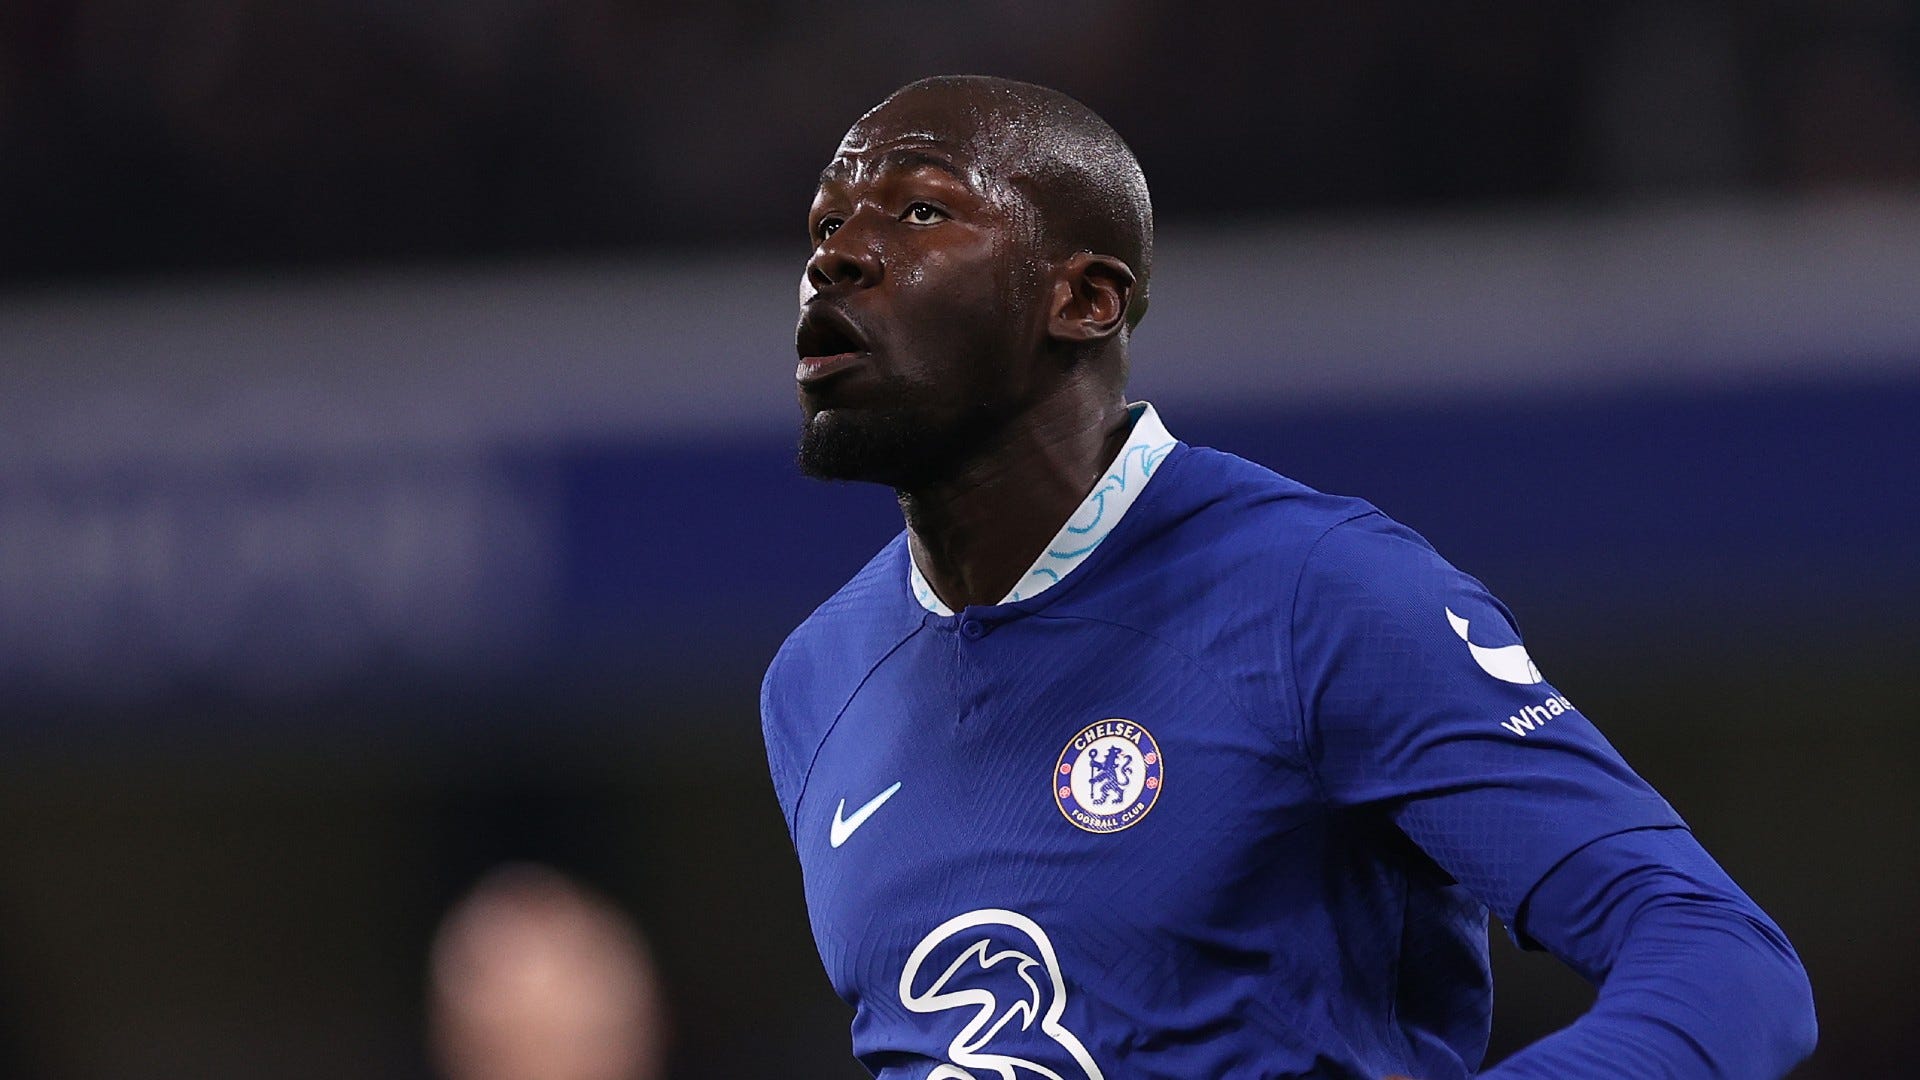 Malheureux al Chelsea, Kalidou Koulibaly al ritorno in Italia?